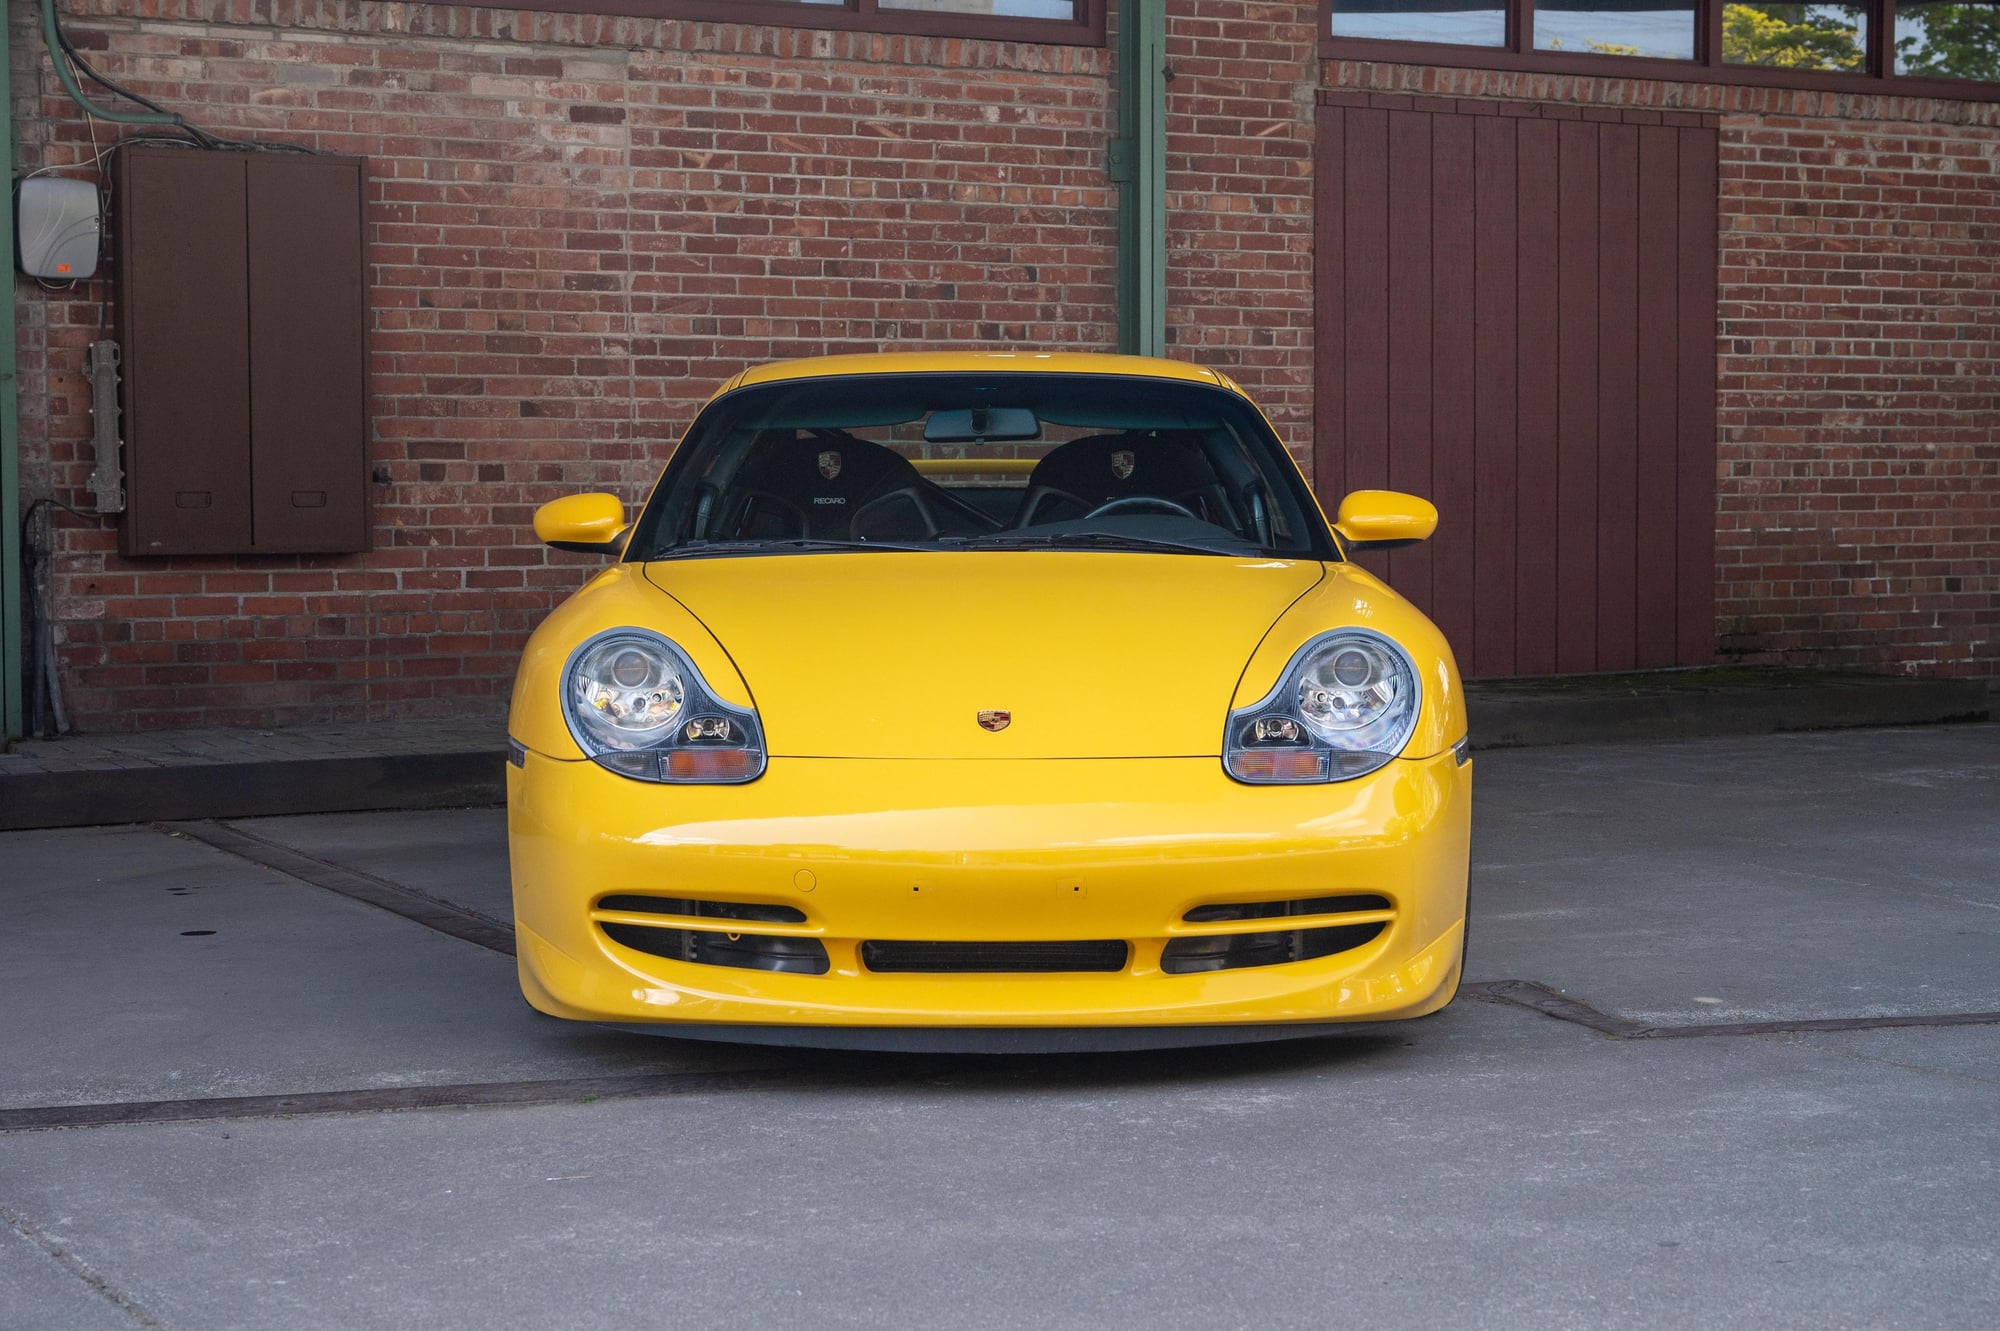 2000 Porsche GT3 - 2000 Porsche GT3 Clubsport - RoW 996.1 GT3 in USA (track use) - Used - Mercer Island, WA 98040, United States